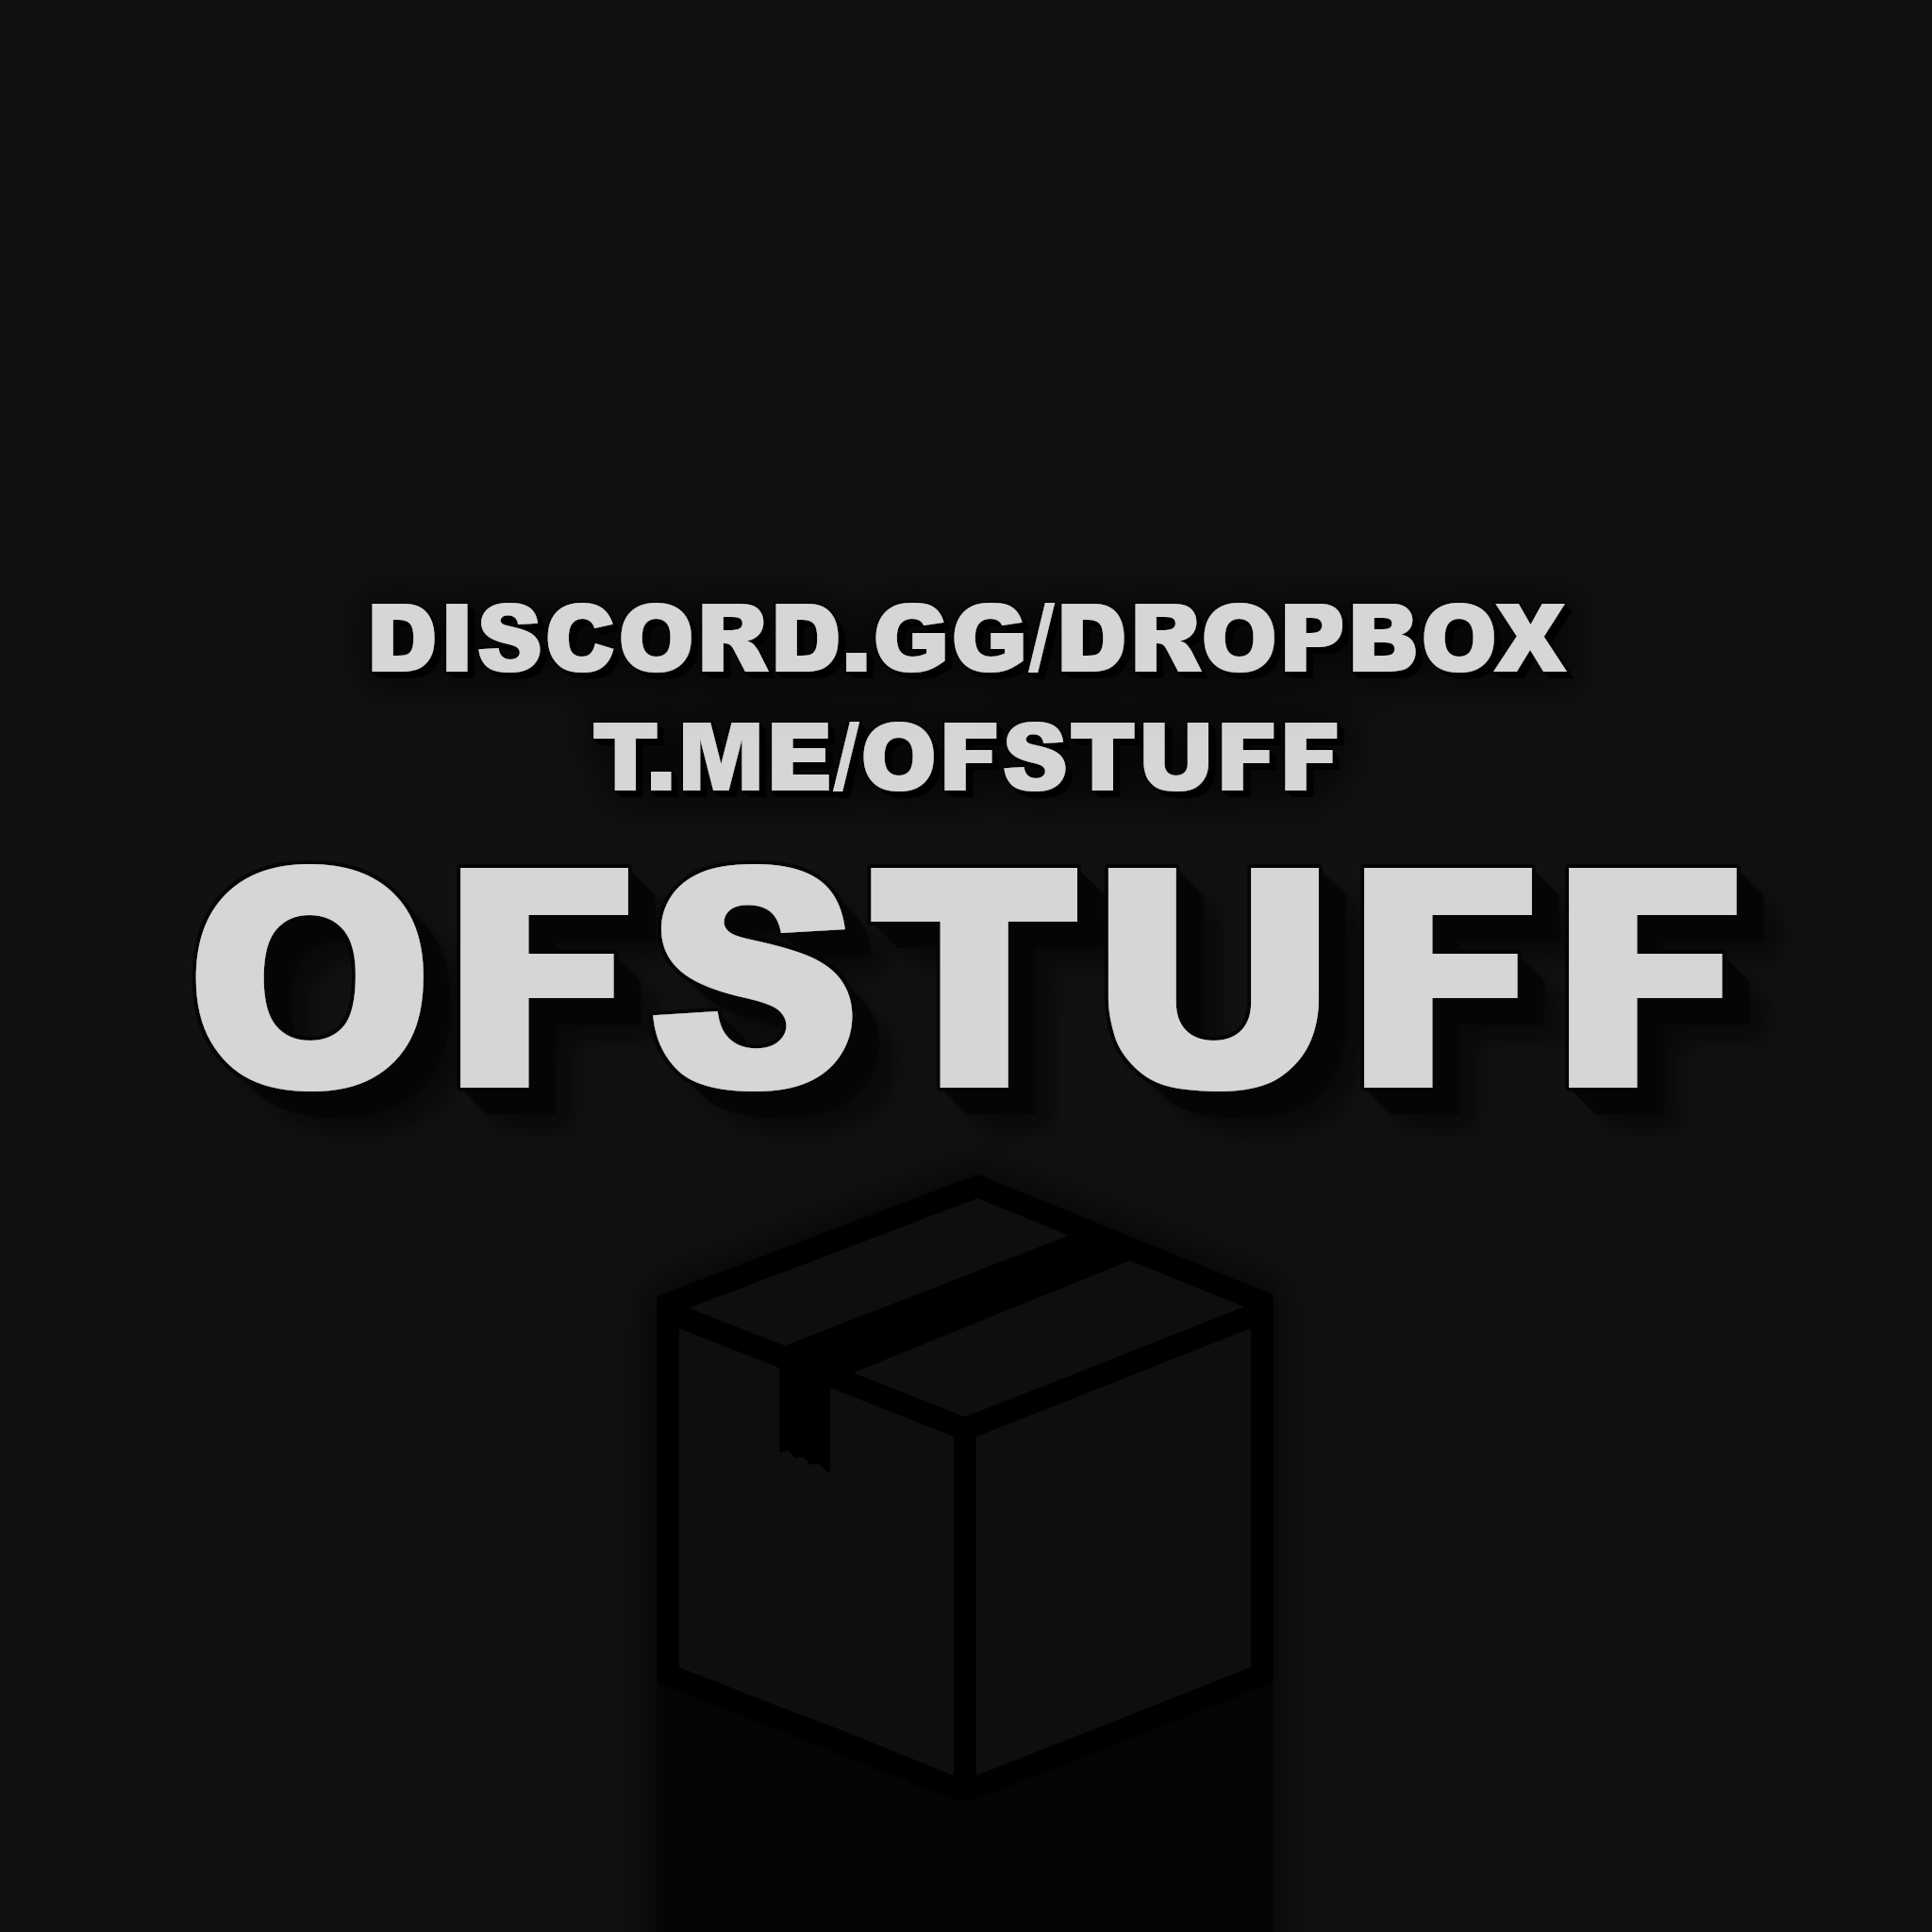 Discord gg dropbox